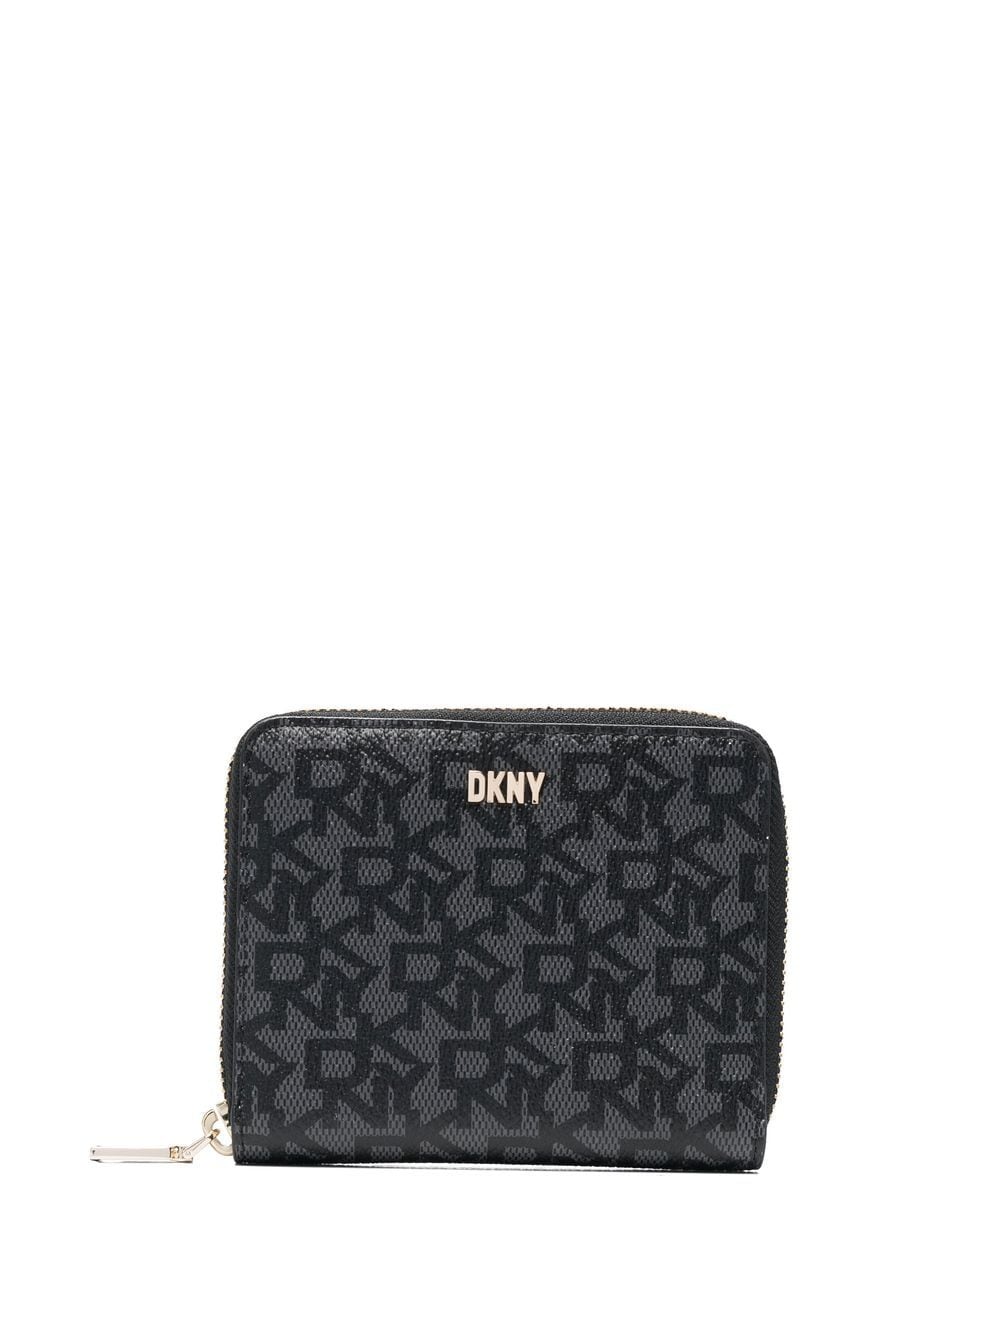 DKNY Bryant Monogram Compact Wallet - Farfetch